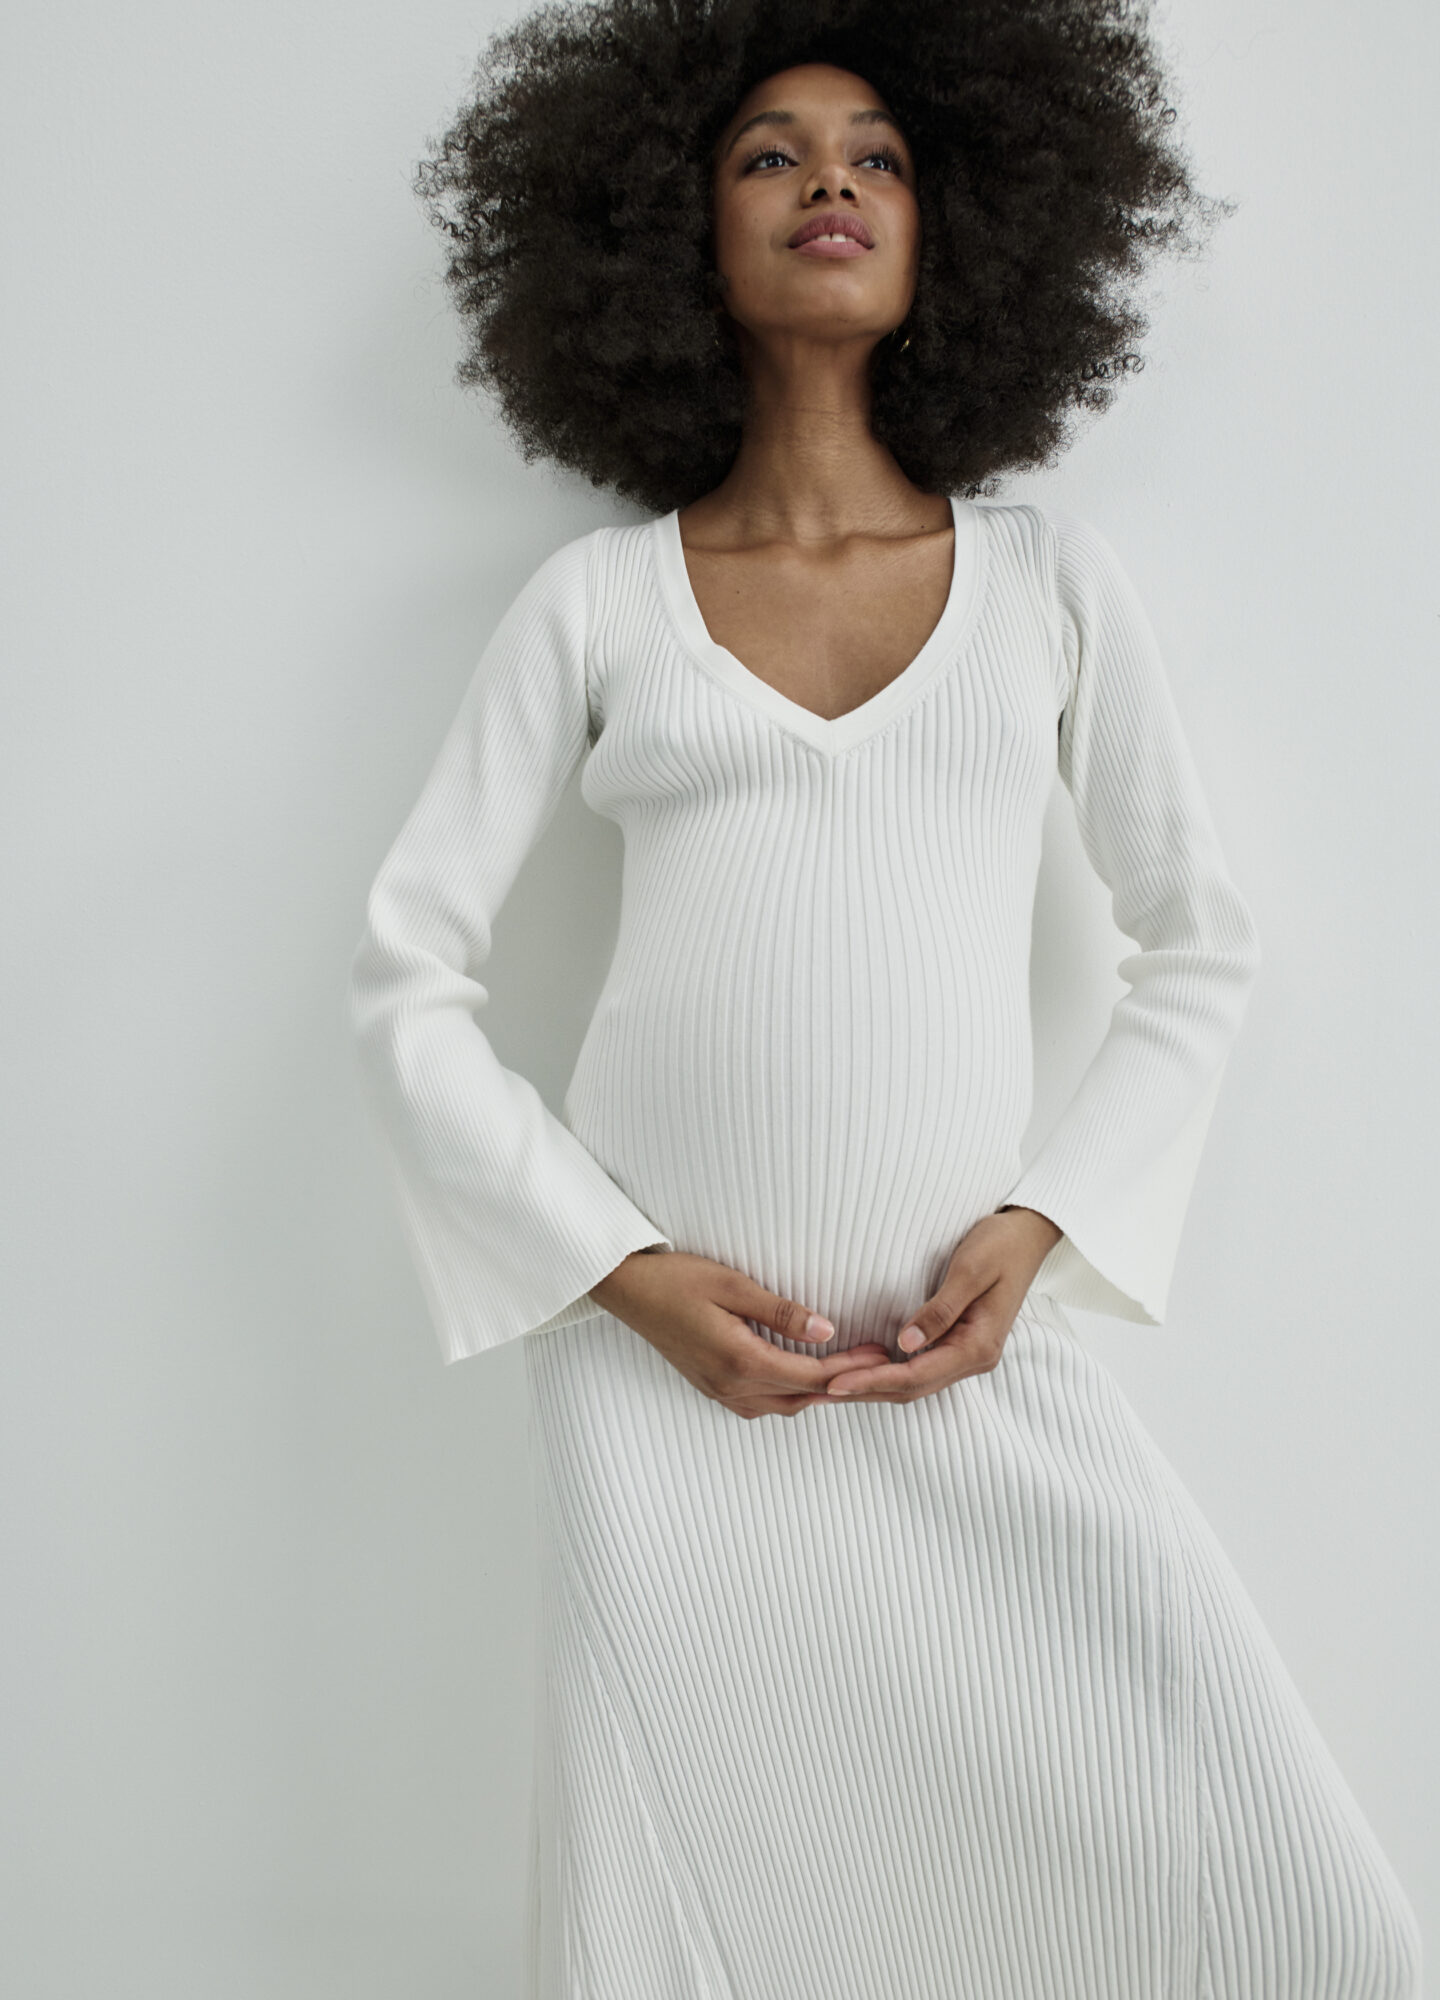 pregnant woman in white dress